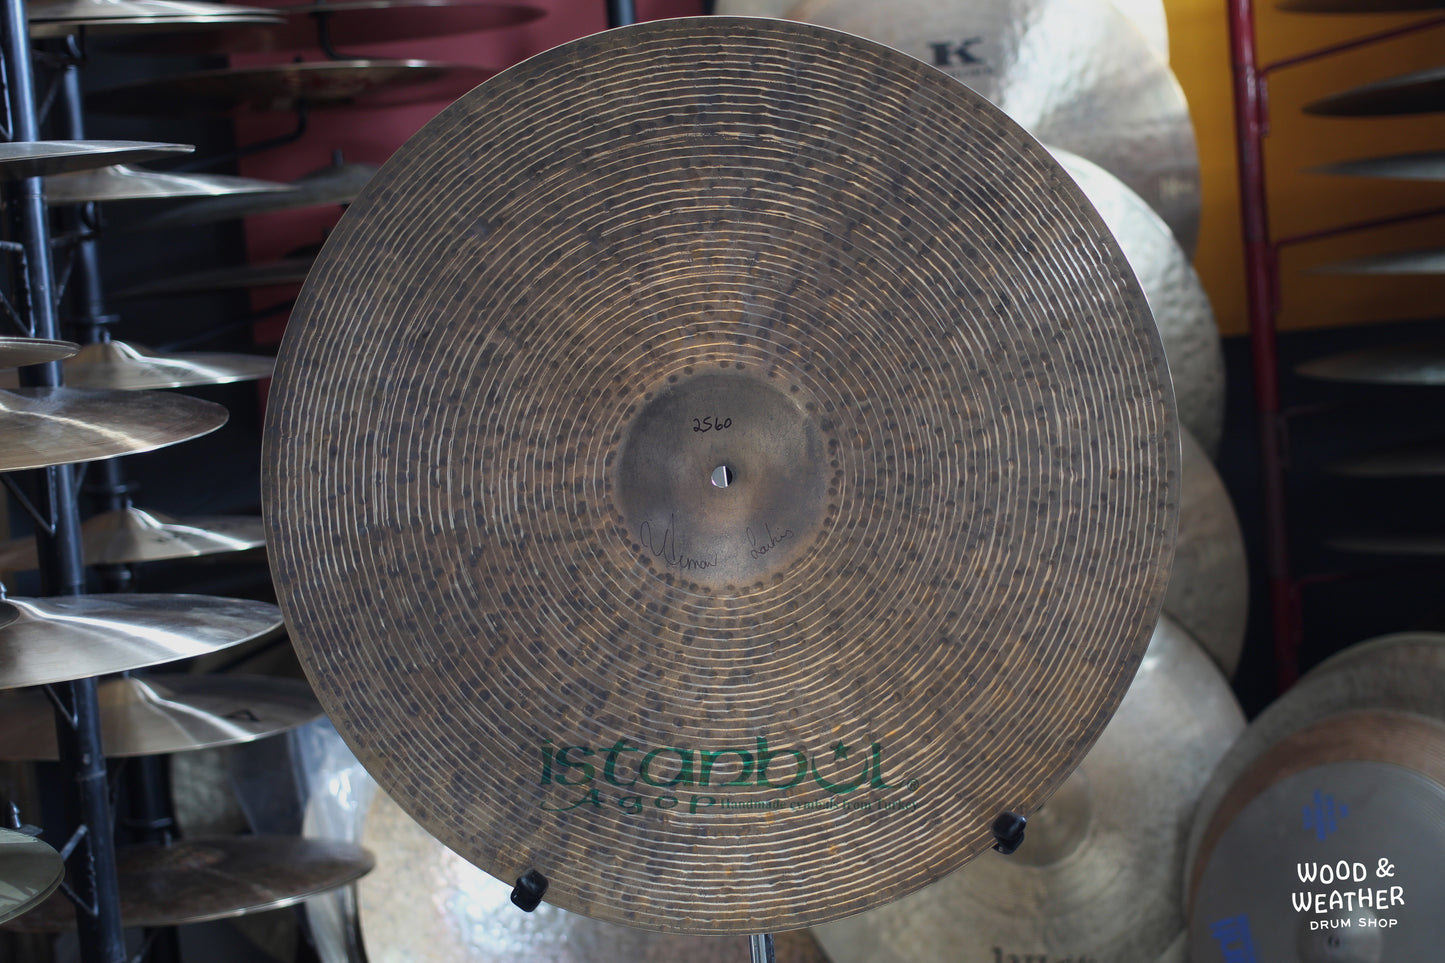 Istanbul Agop 22" Signature Medium Ride Cymbal 2560g